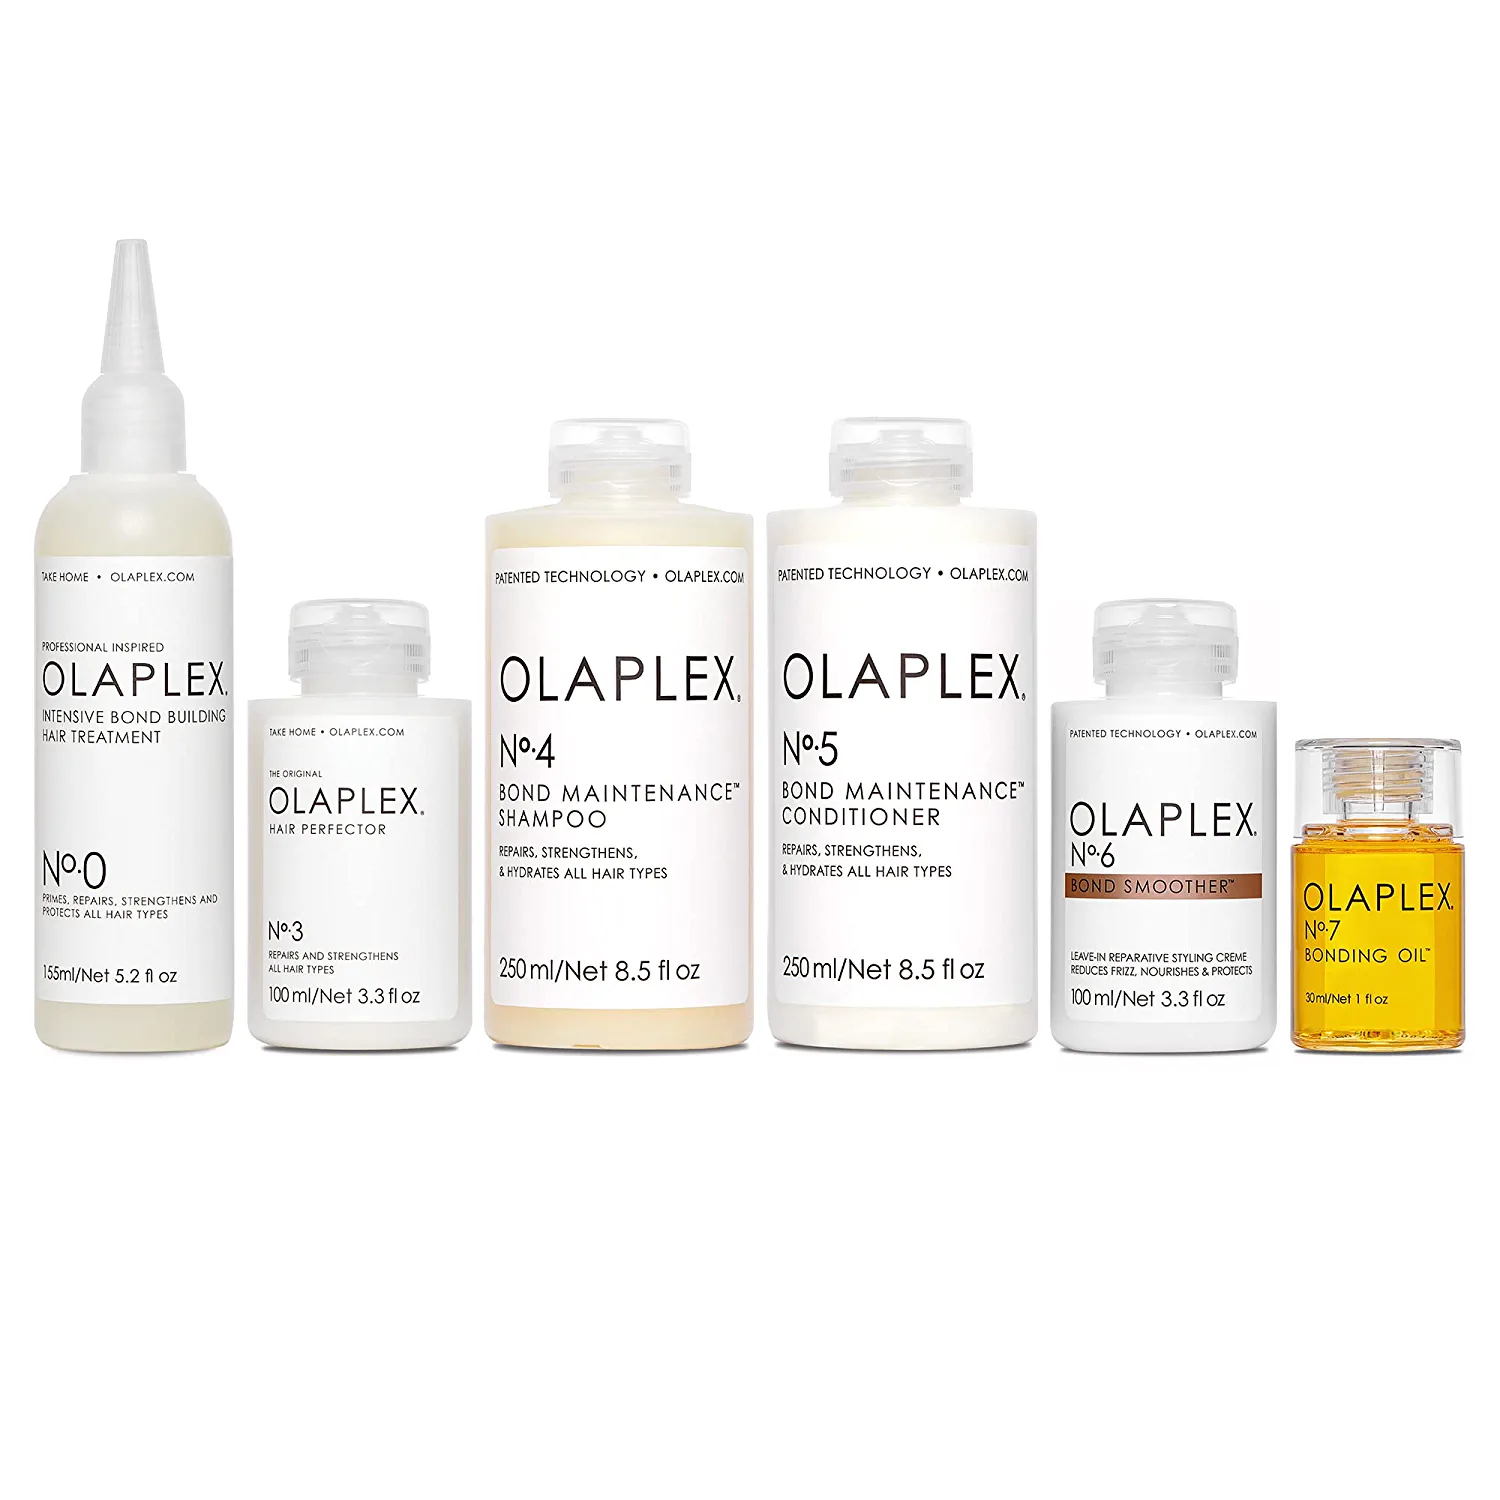 5 best olaplex products for damage hair